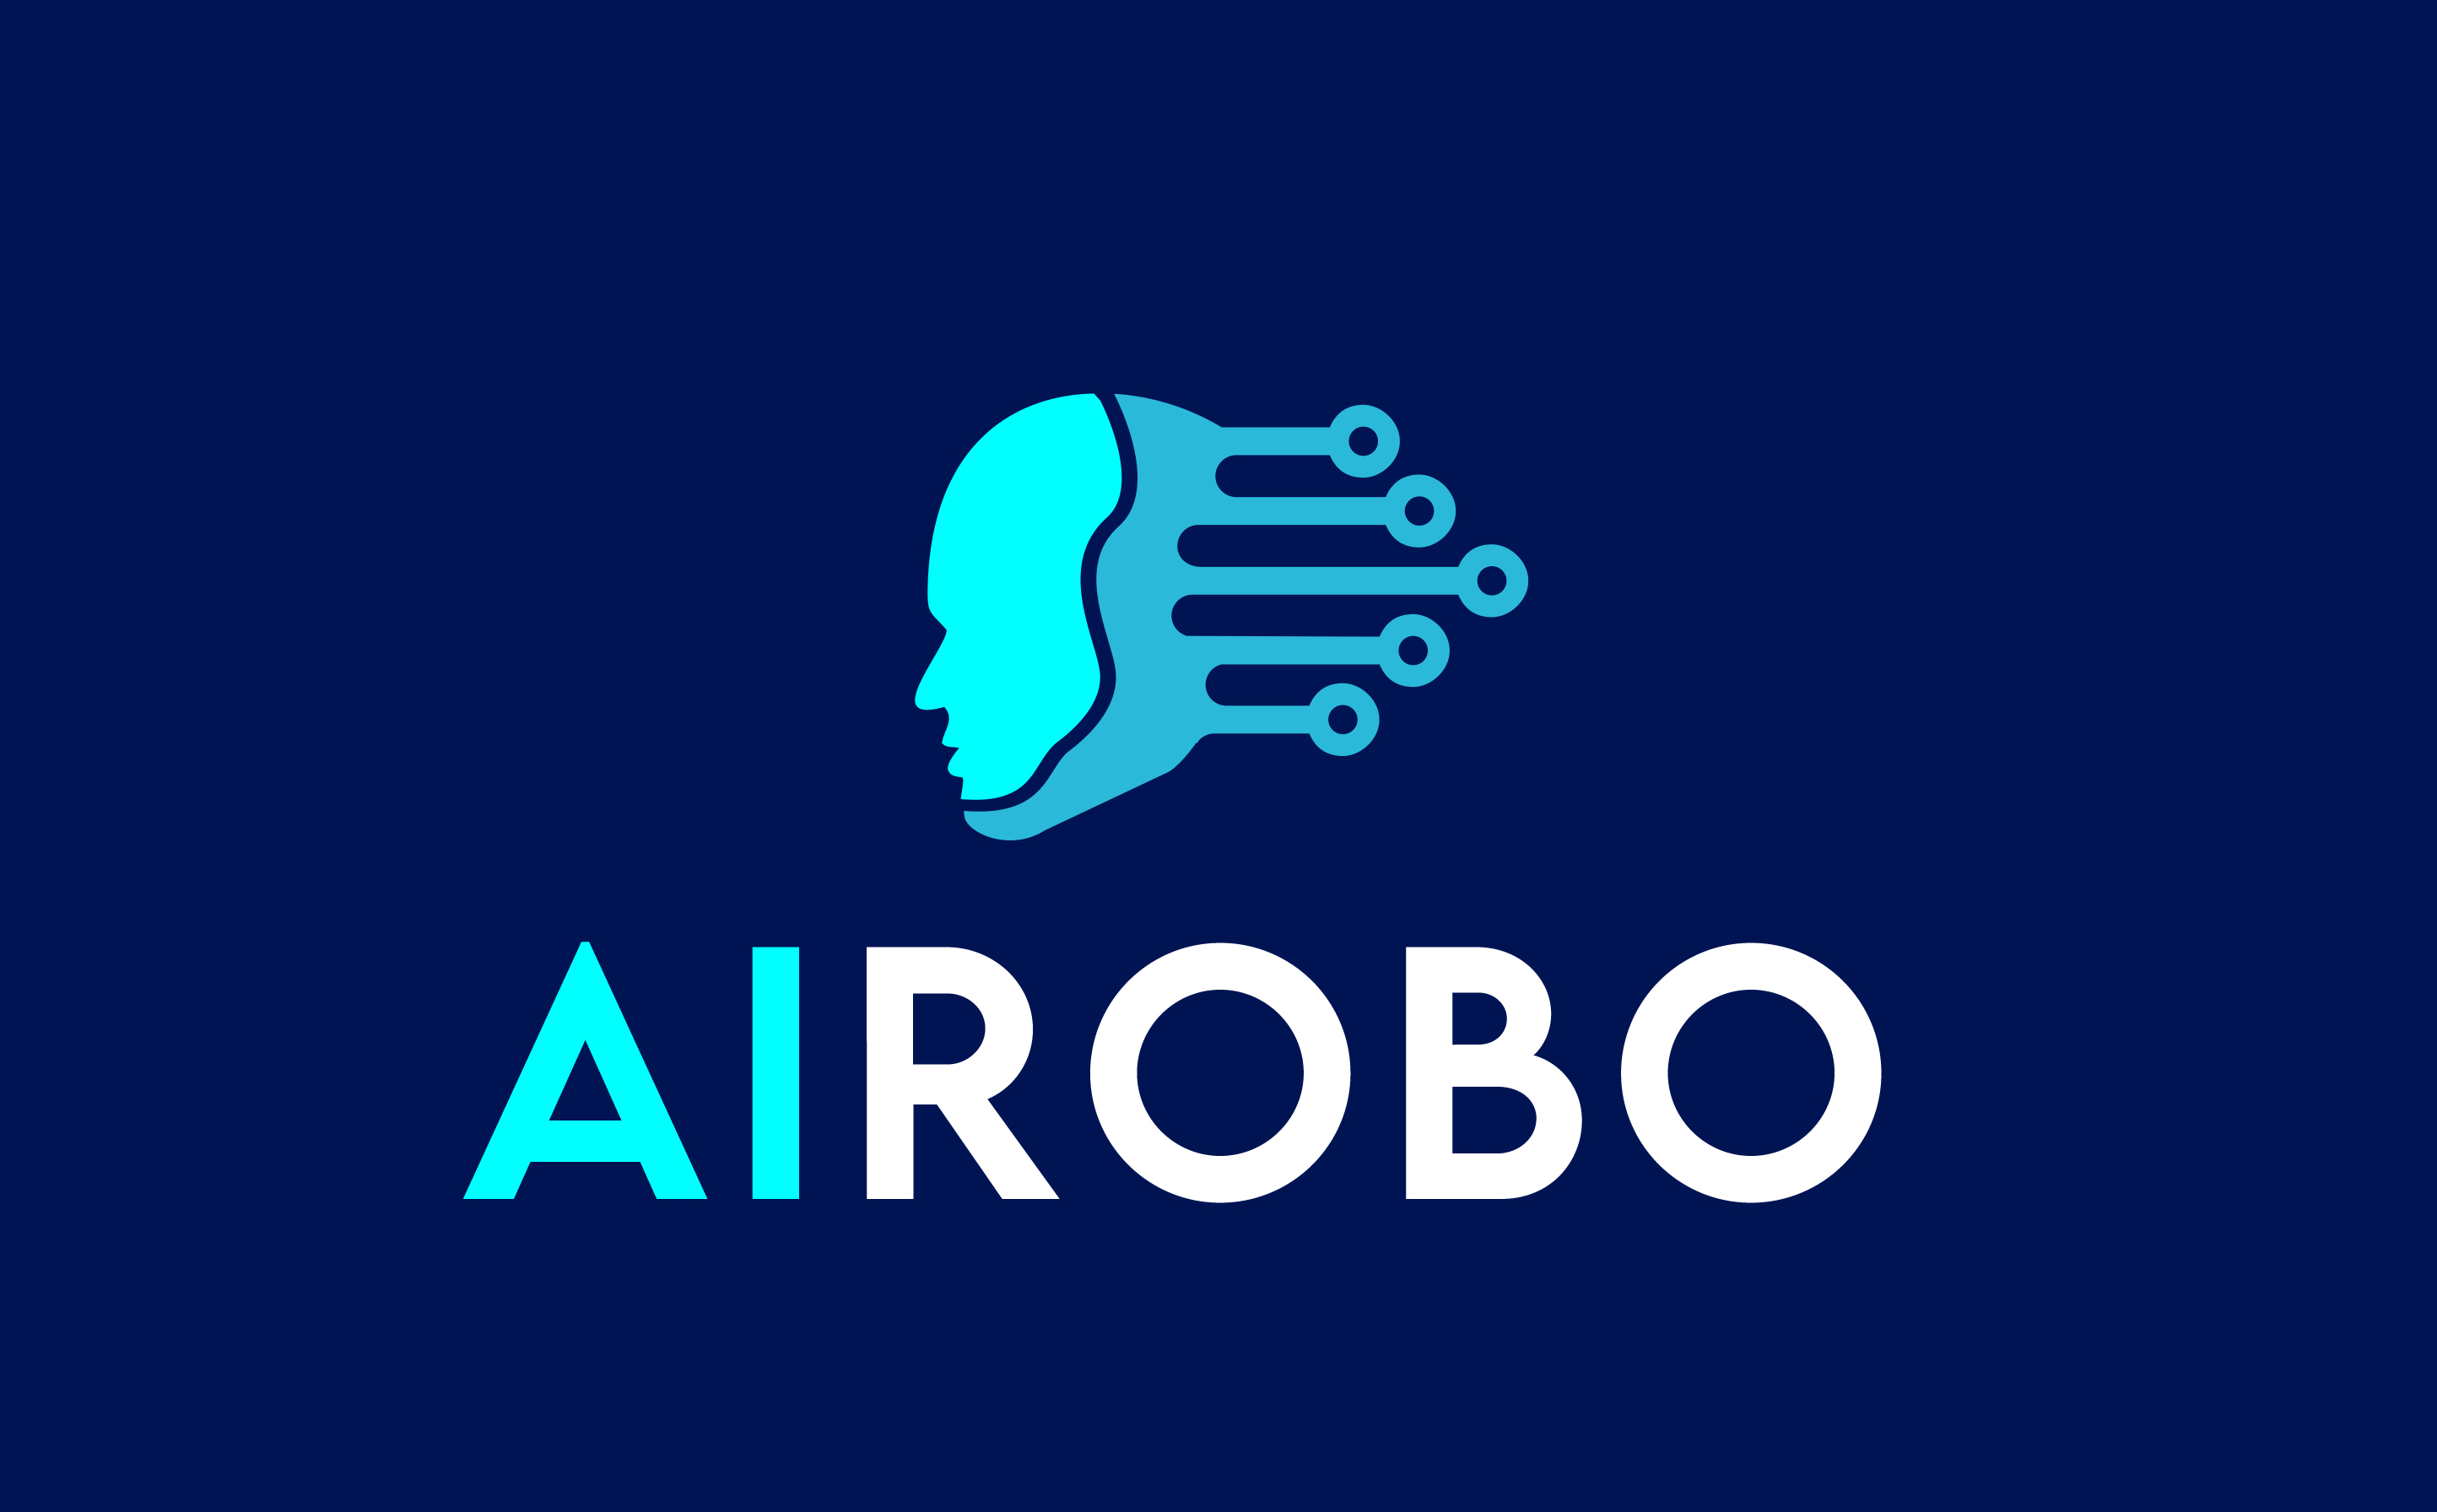 airobo~org.jpg